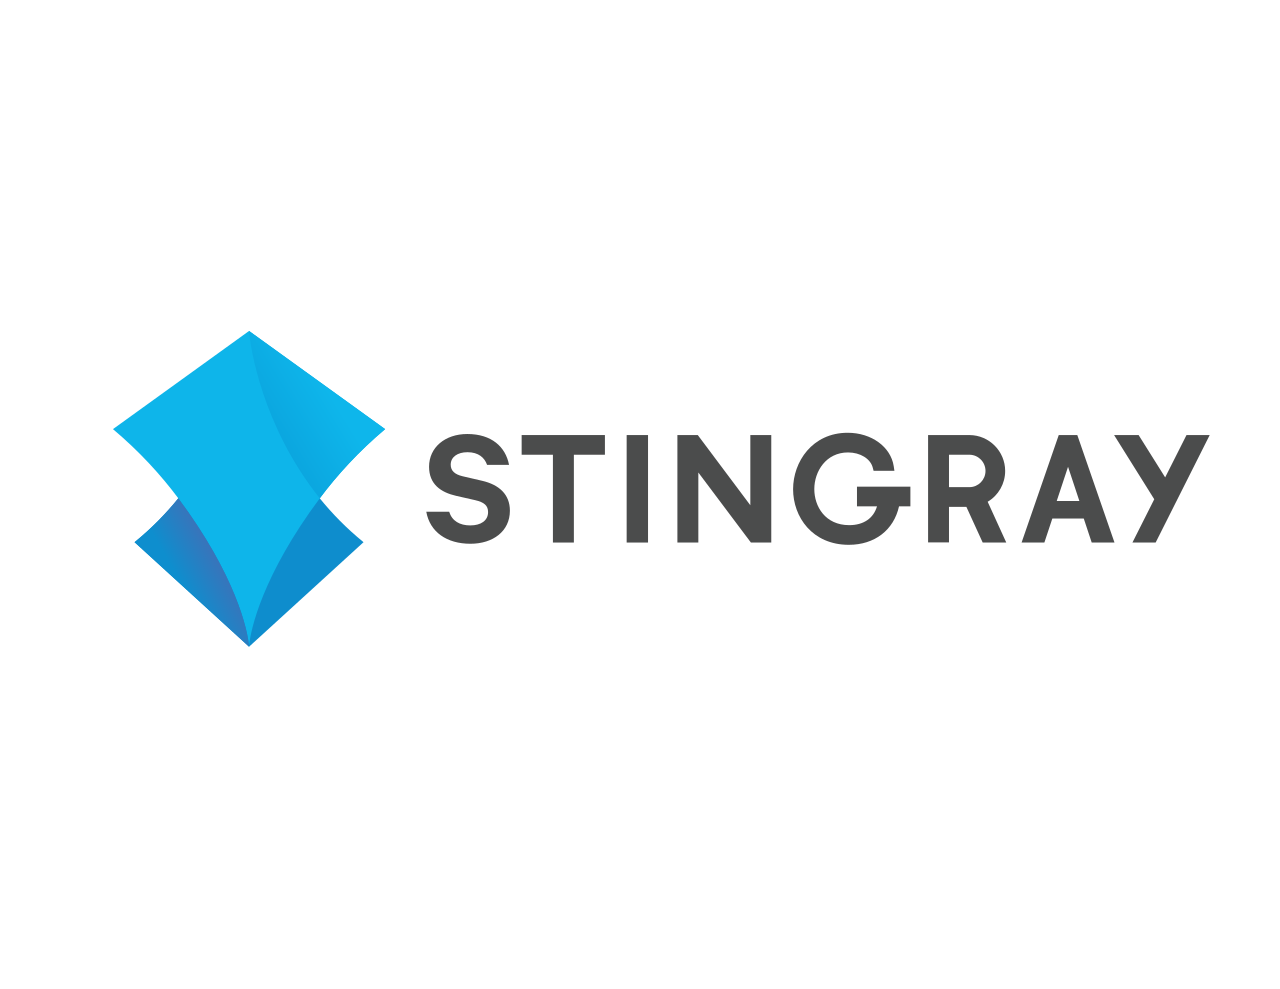 Stingray svg #8, Download drawings